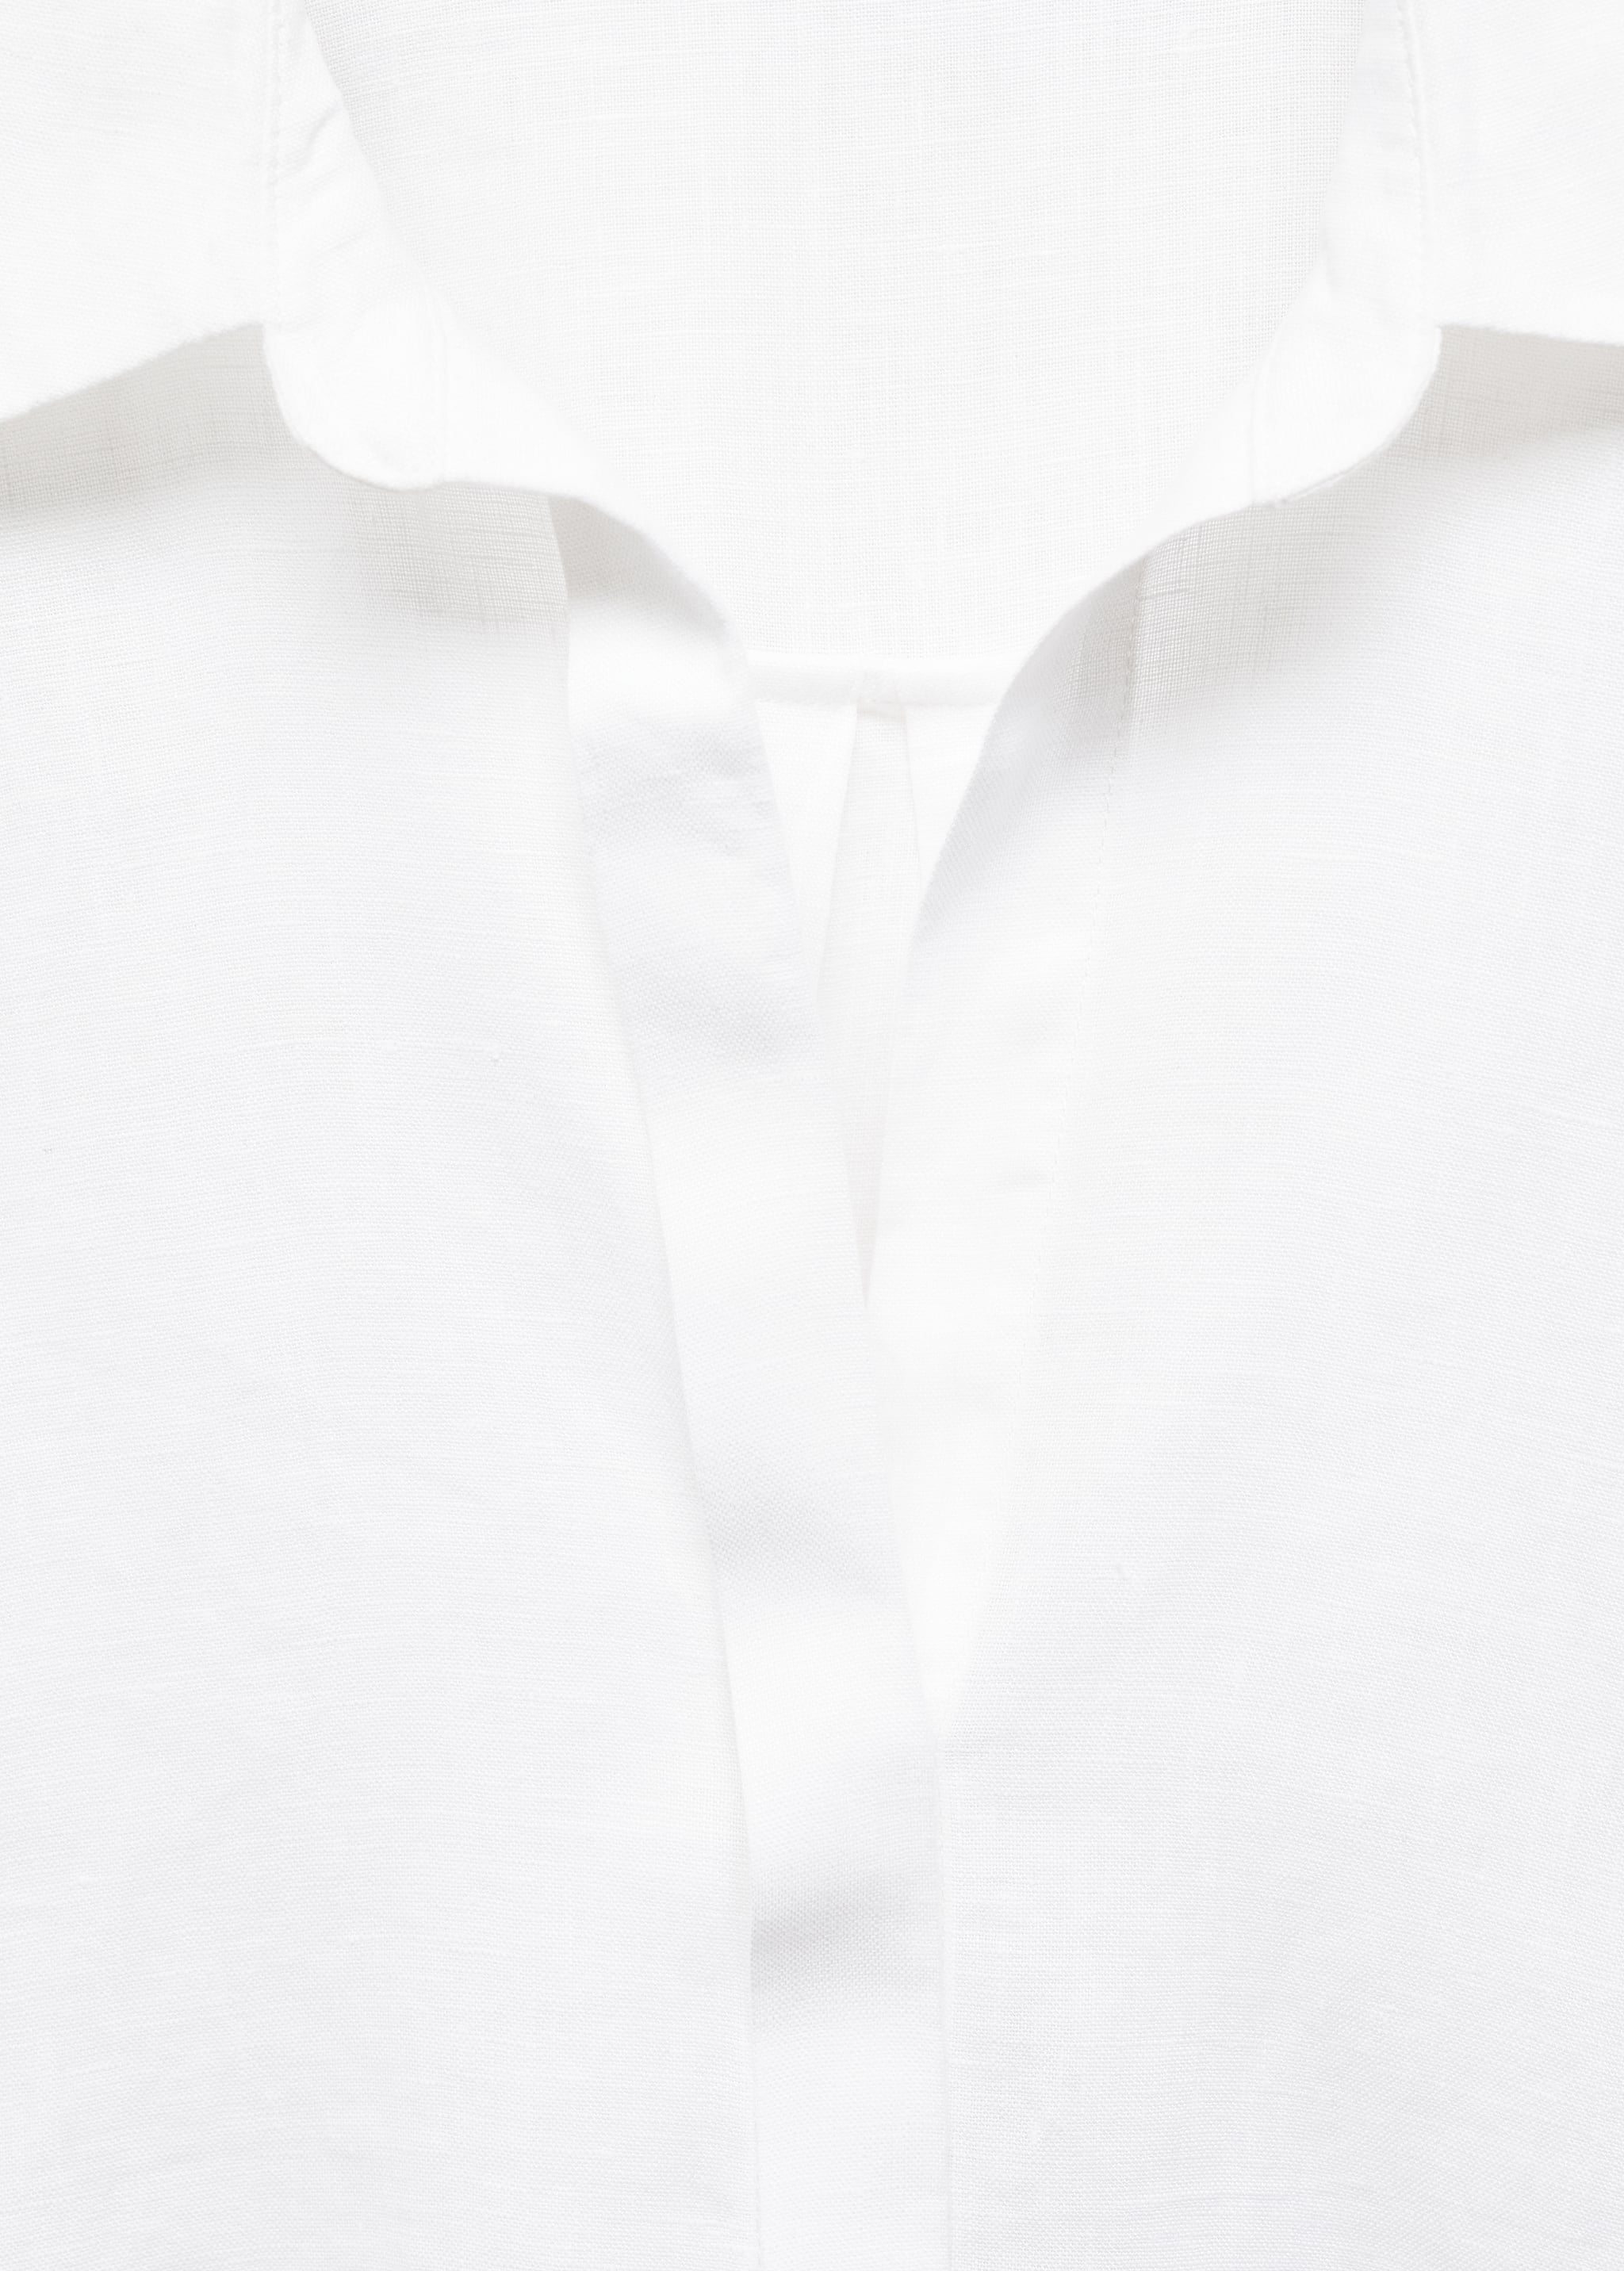 Linen 100% shirt - Details of the article 8